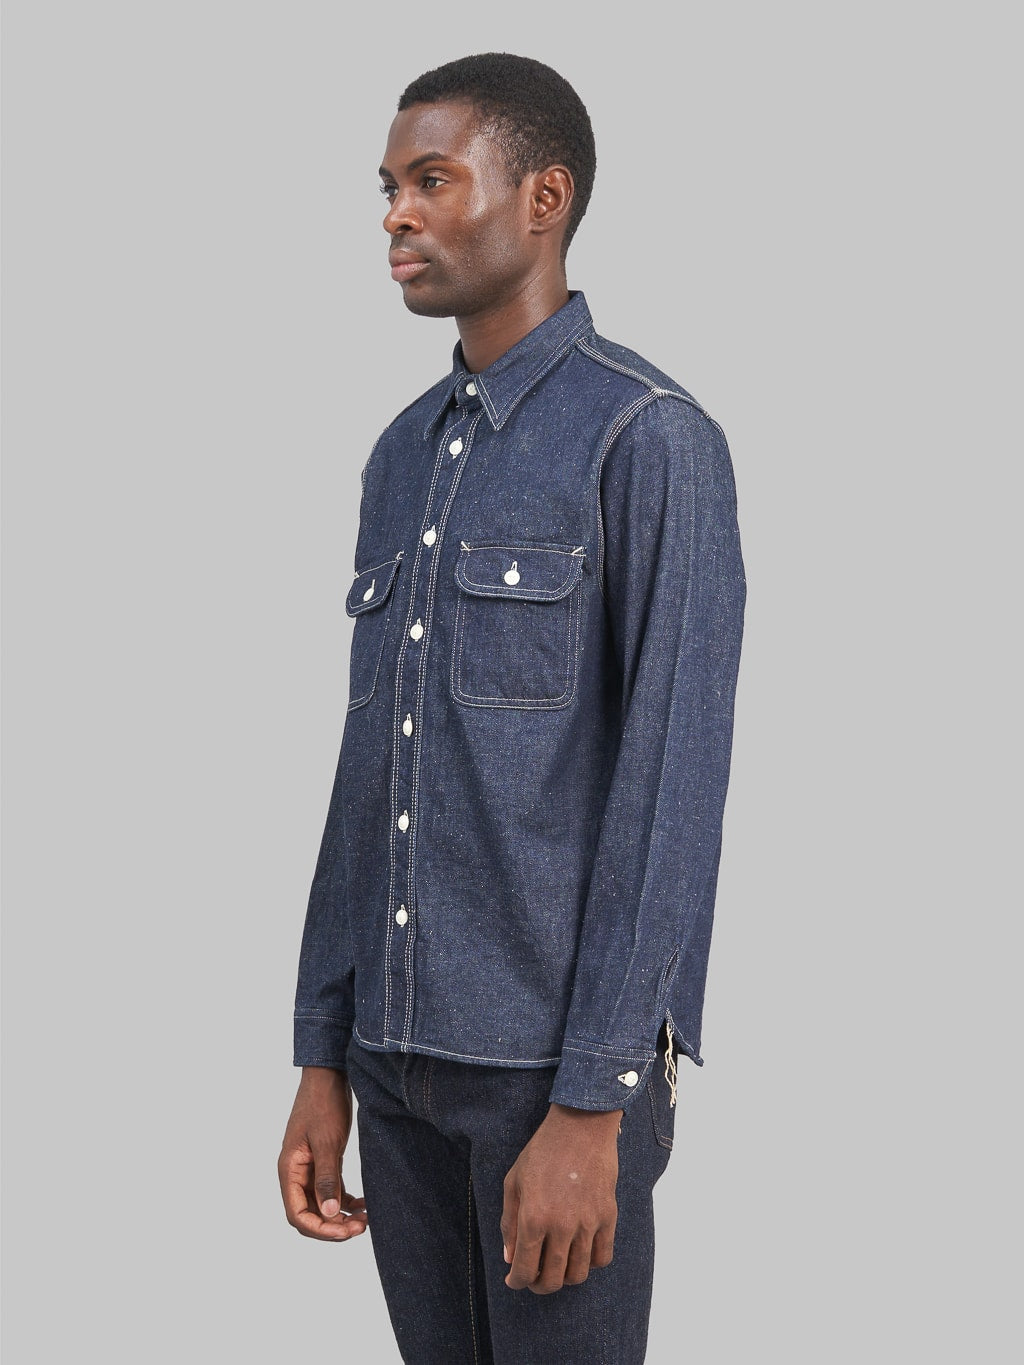 Samurai jeans denim work shirt model side fit